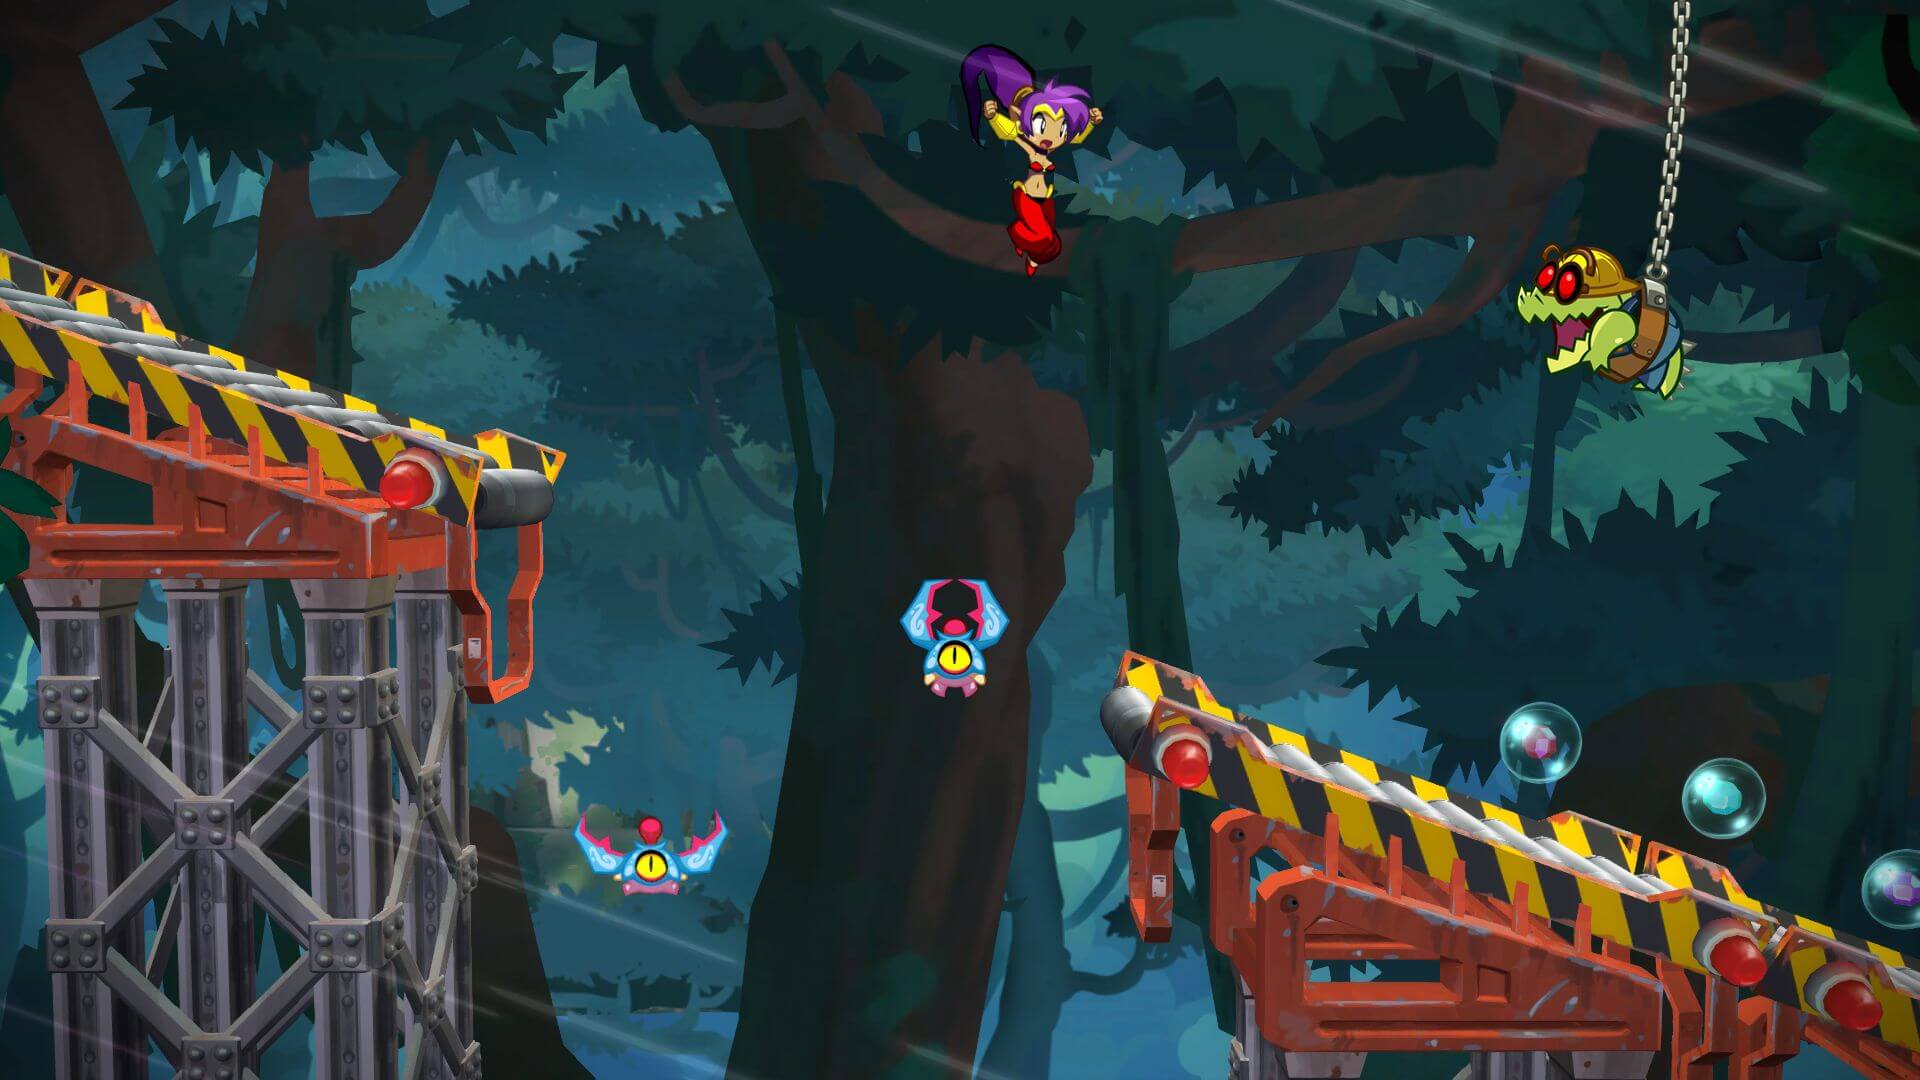 Download background video game, shantae: half genie hero